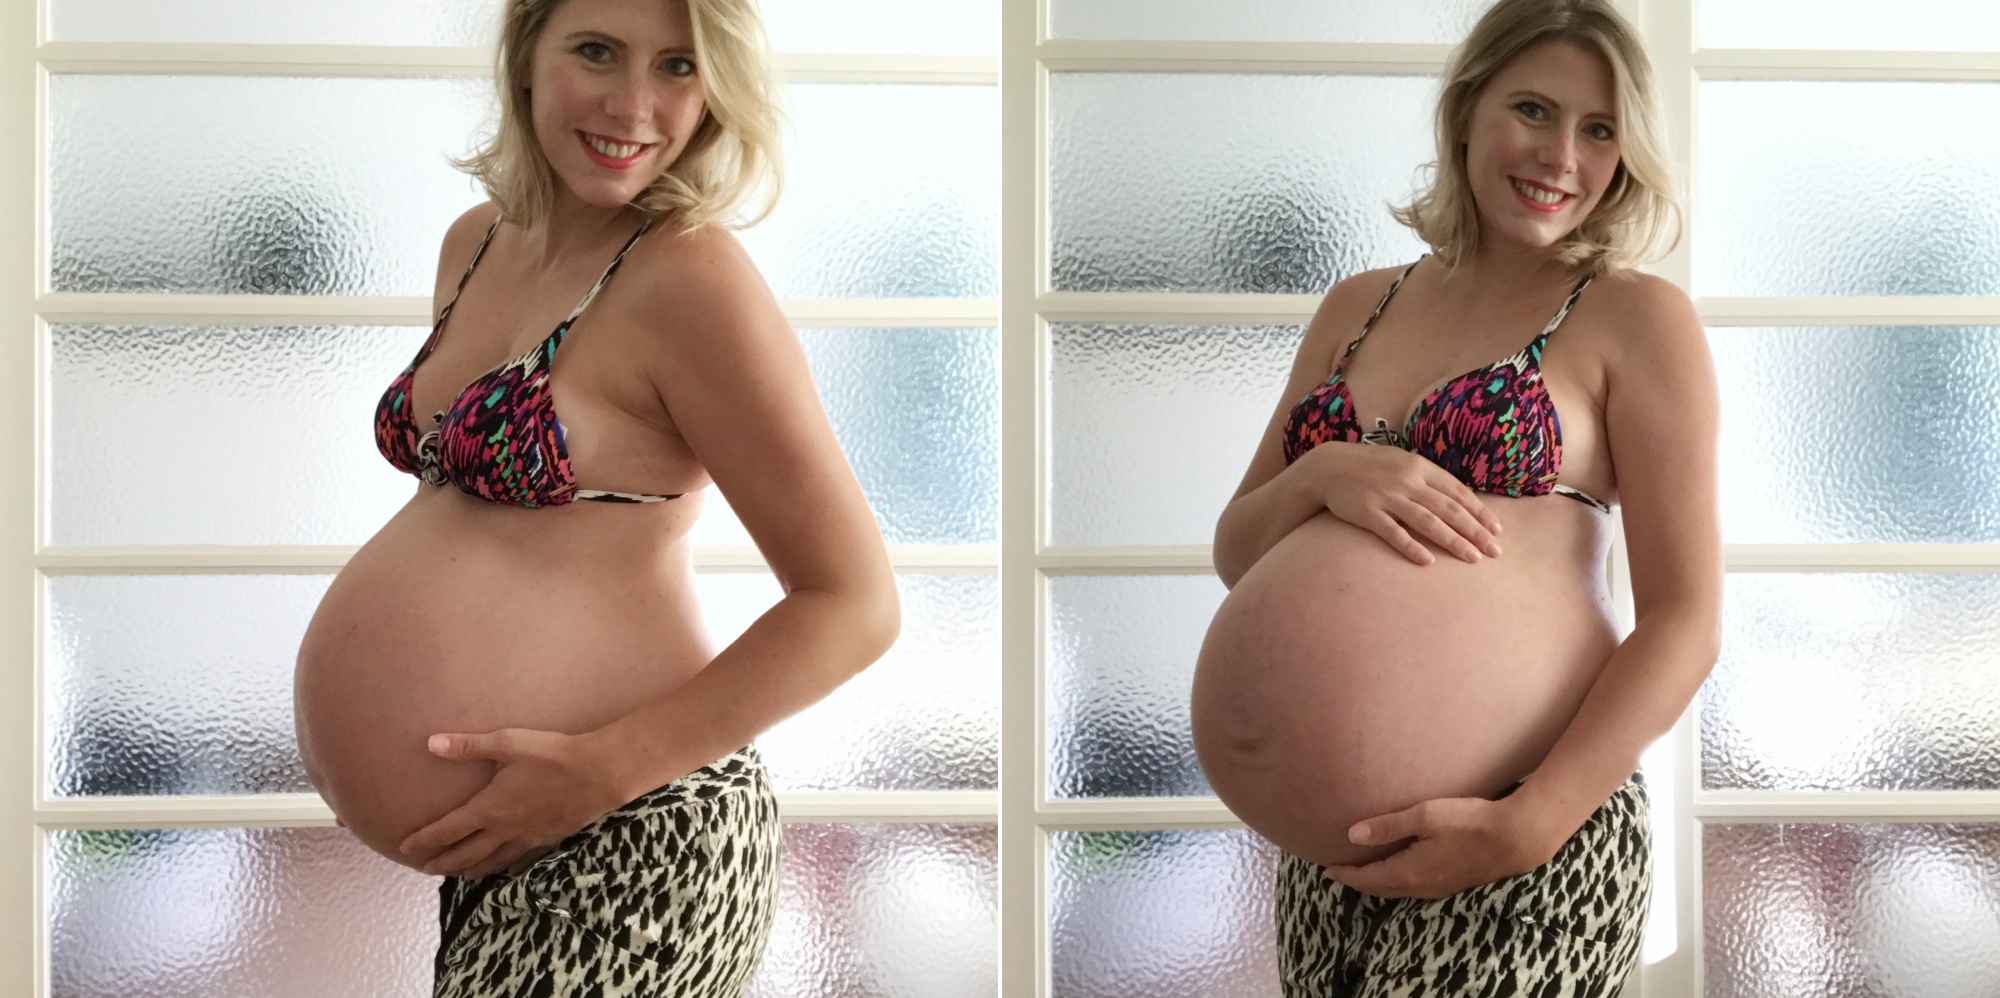 Meine schwangerschaft update schwangerschaftswoche 35. 😱 schwanger trotz n...